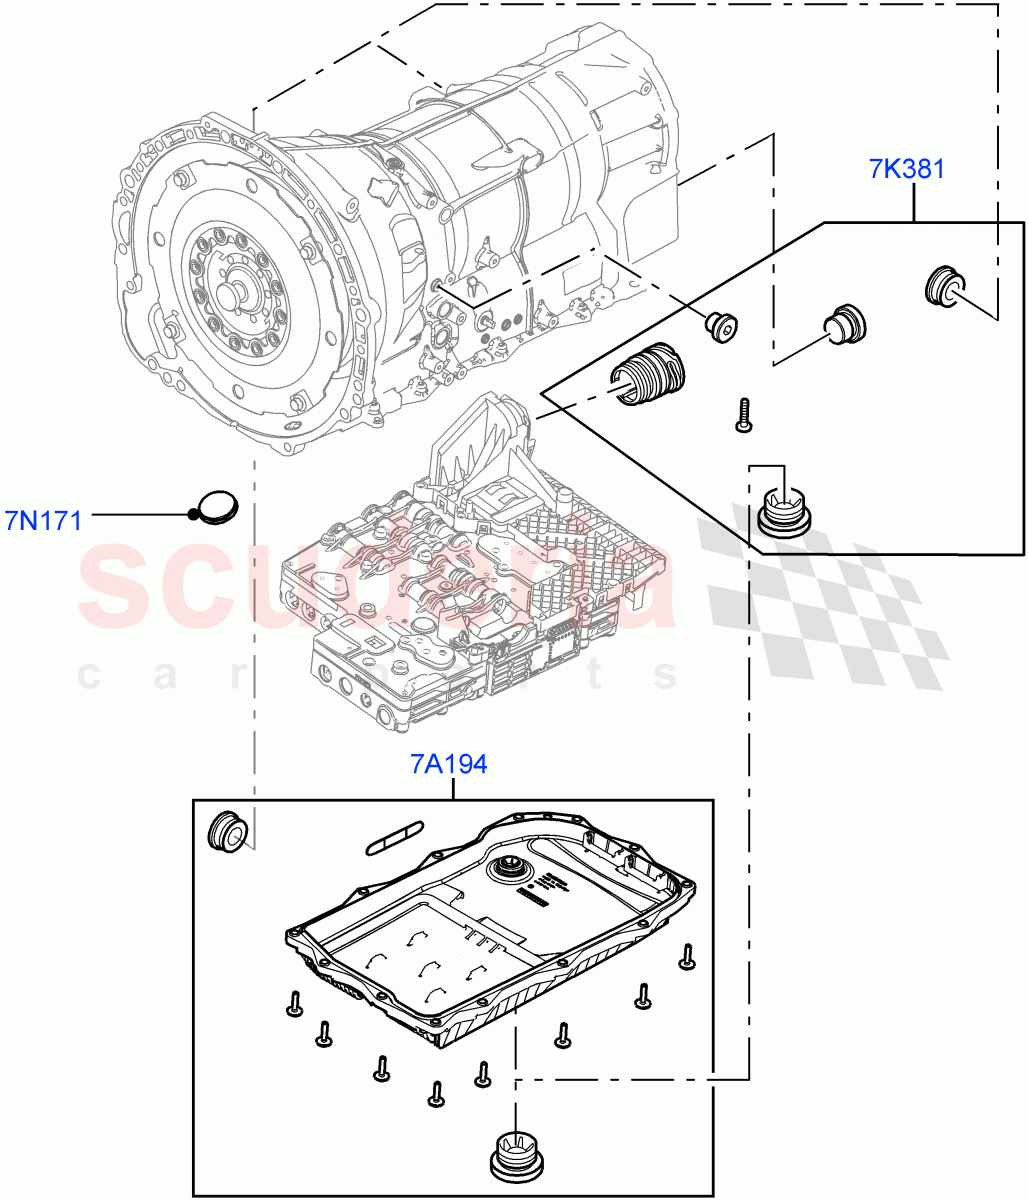 Transmission External Components(3.0L DOHC GDI SC V6 PETROL,8 Speed Auto Trans ZF 8HP70 4WD,3.0 V6 D Gen2 Twin Turbo) of Land Rover Land Rover Range Rover Velar (2017+) [3.0 DOHC GDI SC V6 Petrol]